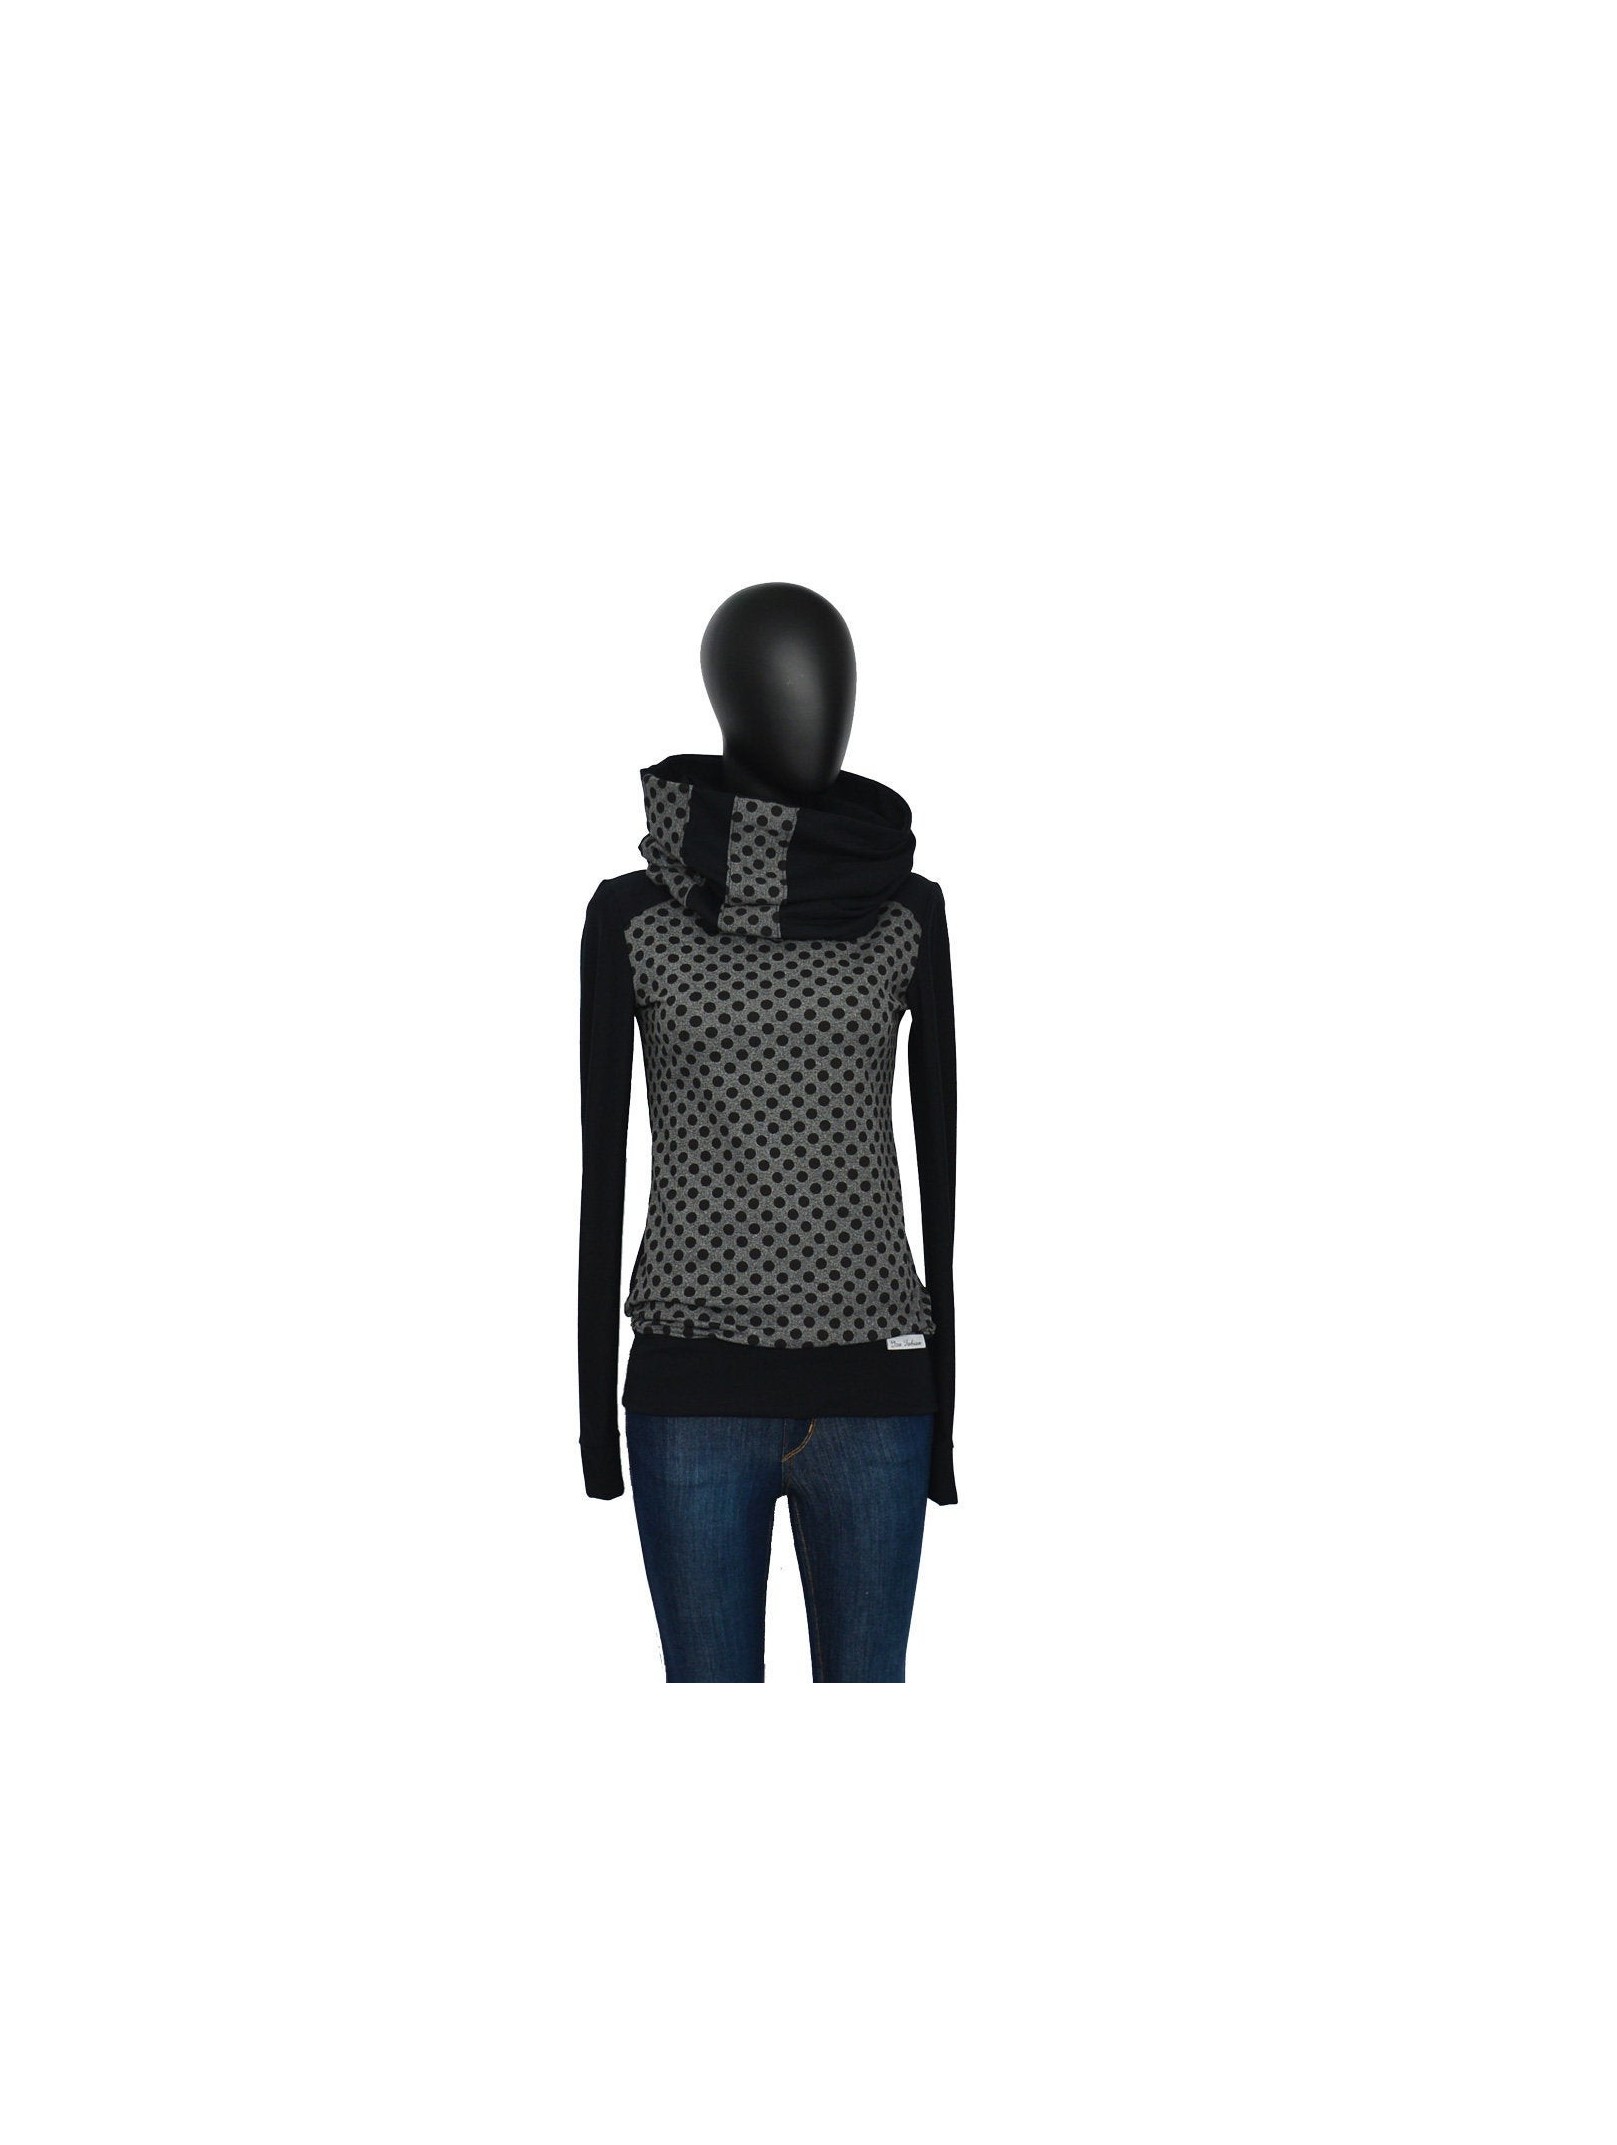 Iza Fabian Hoodie, -BIC15-, schwarz grau sweater pullover women damen dots punkte gray black